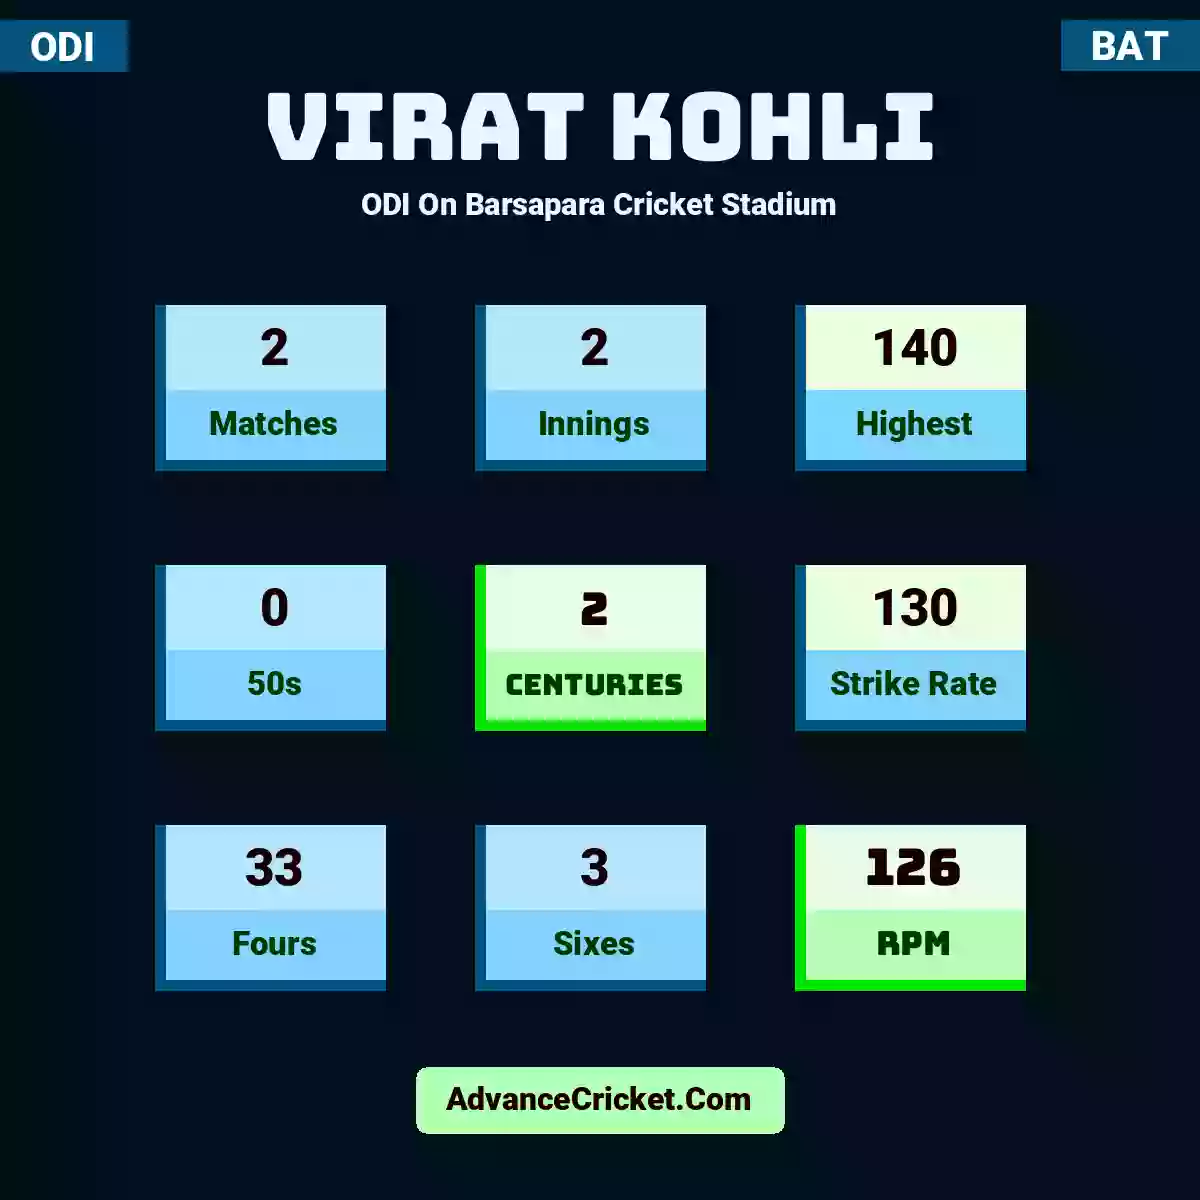 Virat Kohli ODI  On Barsapara Cricket Stadium, Virat Kohli played 2 matches, scored 140 runs as highest, 0 half-centuries, and 2 centuries, with a strike rate of 130. V.Kohli hit 33 fours and 3 sixes, with an RPM of 126.